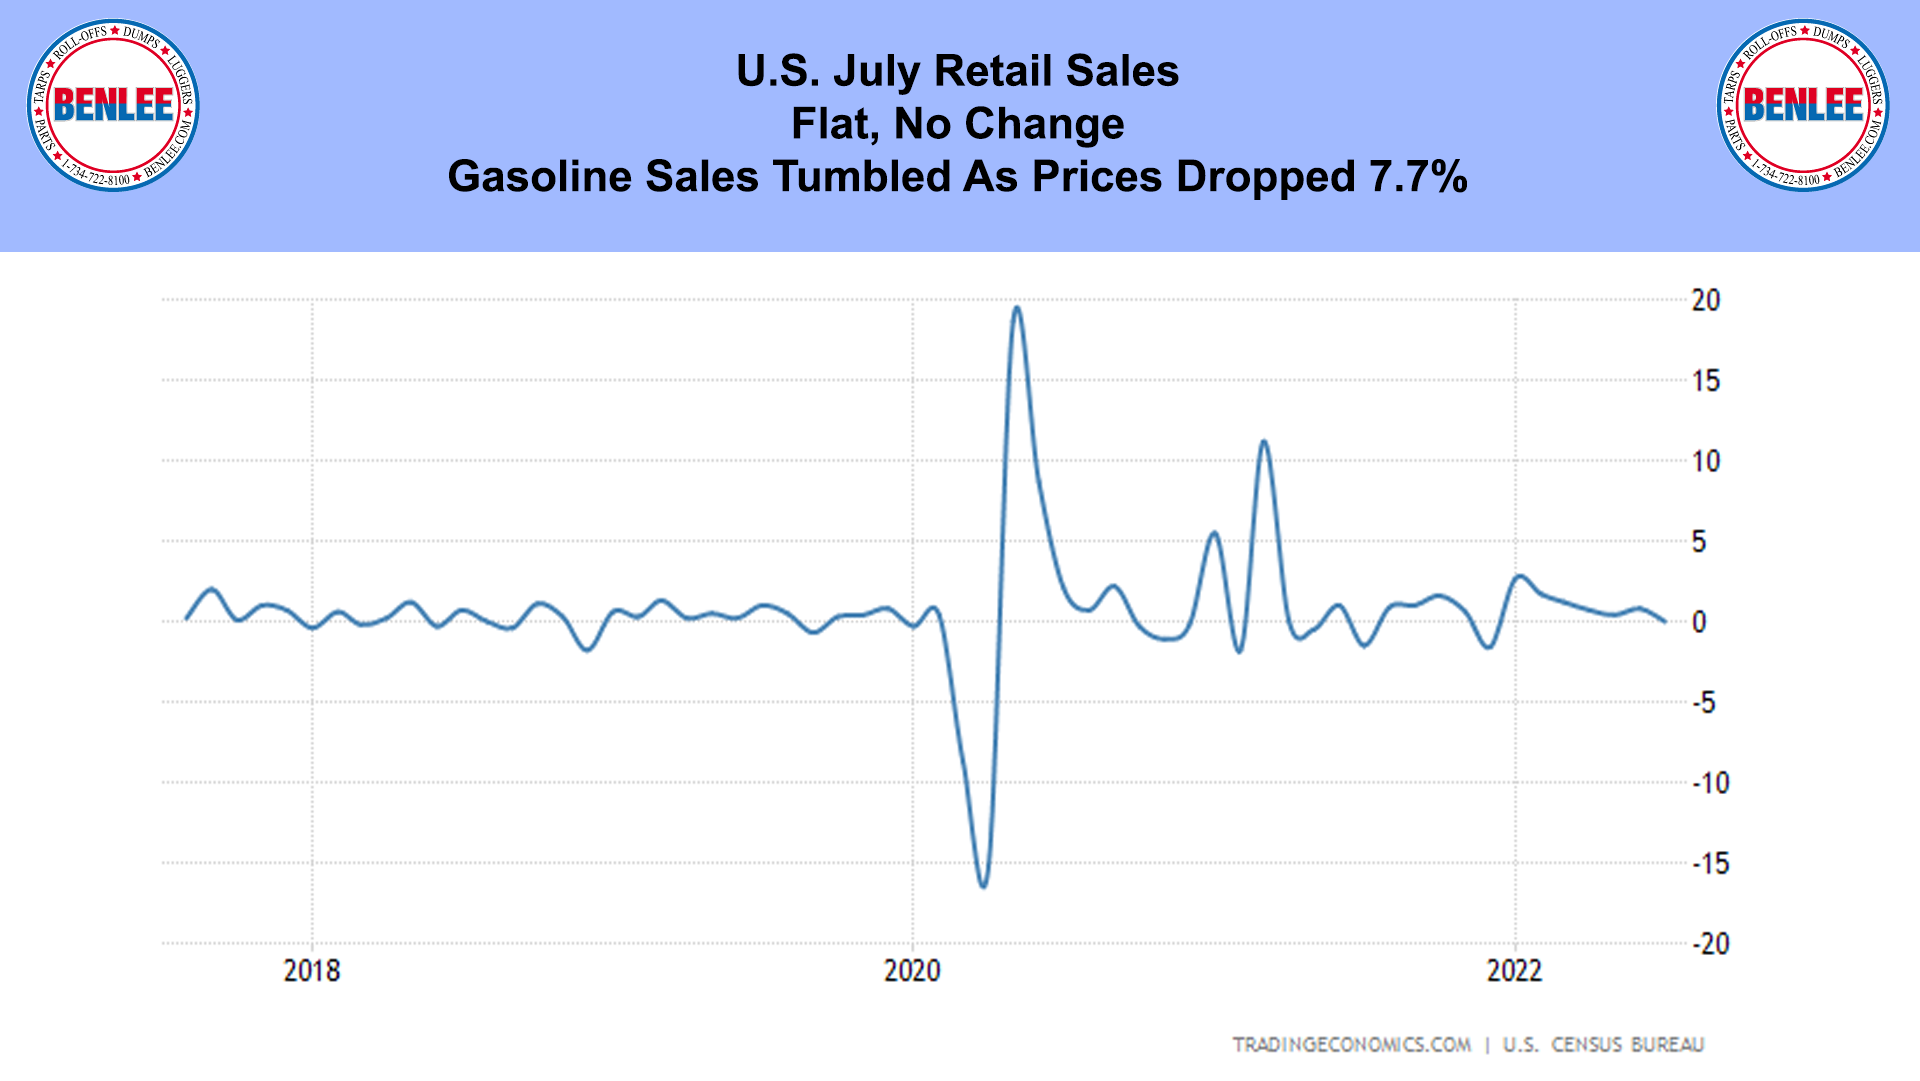 U.S. July Retail Sales